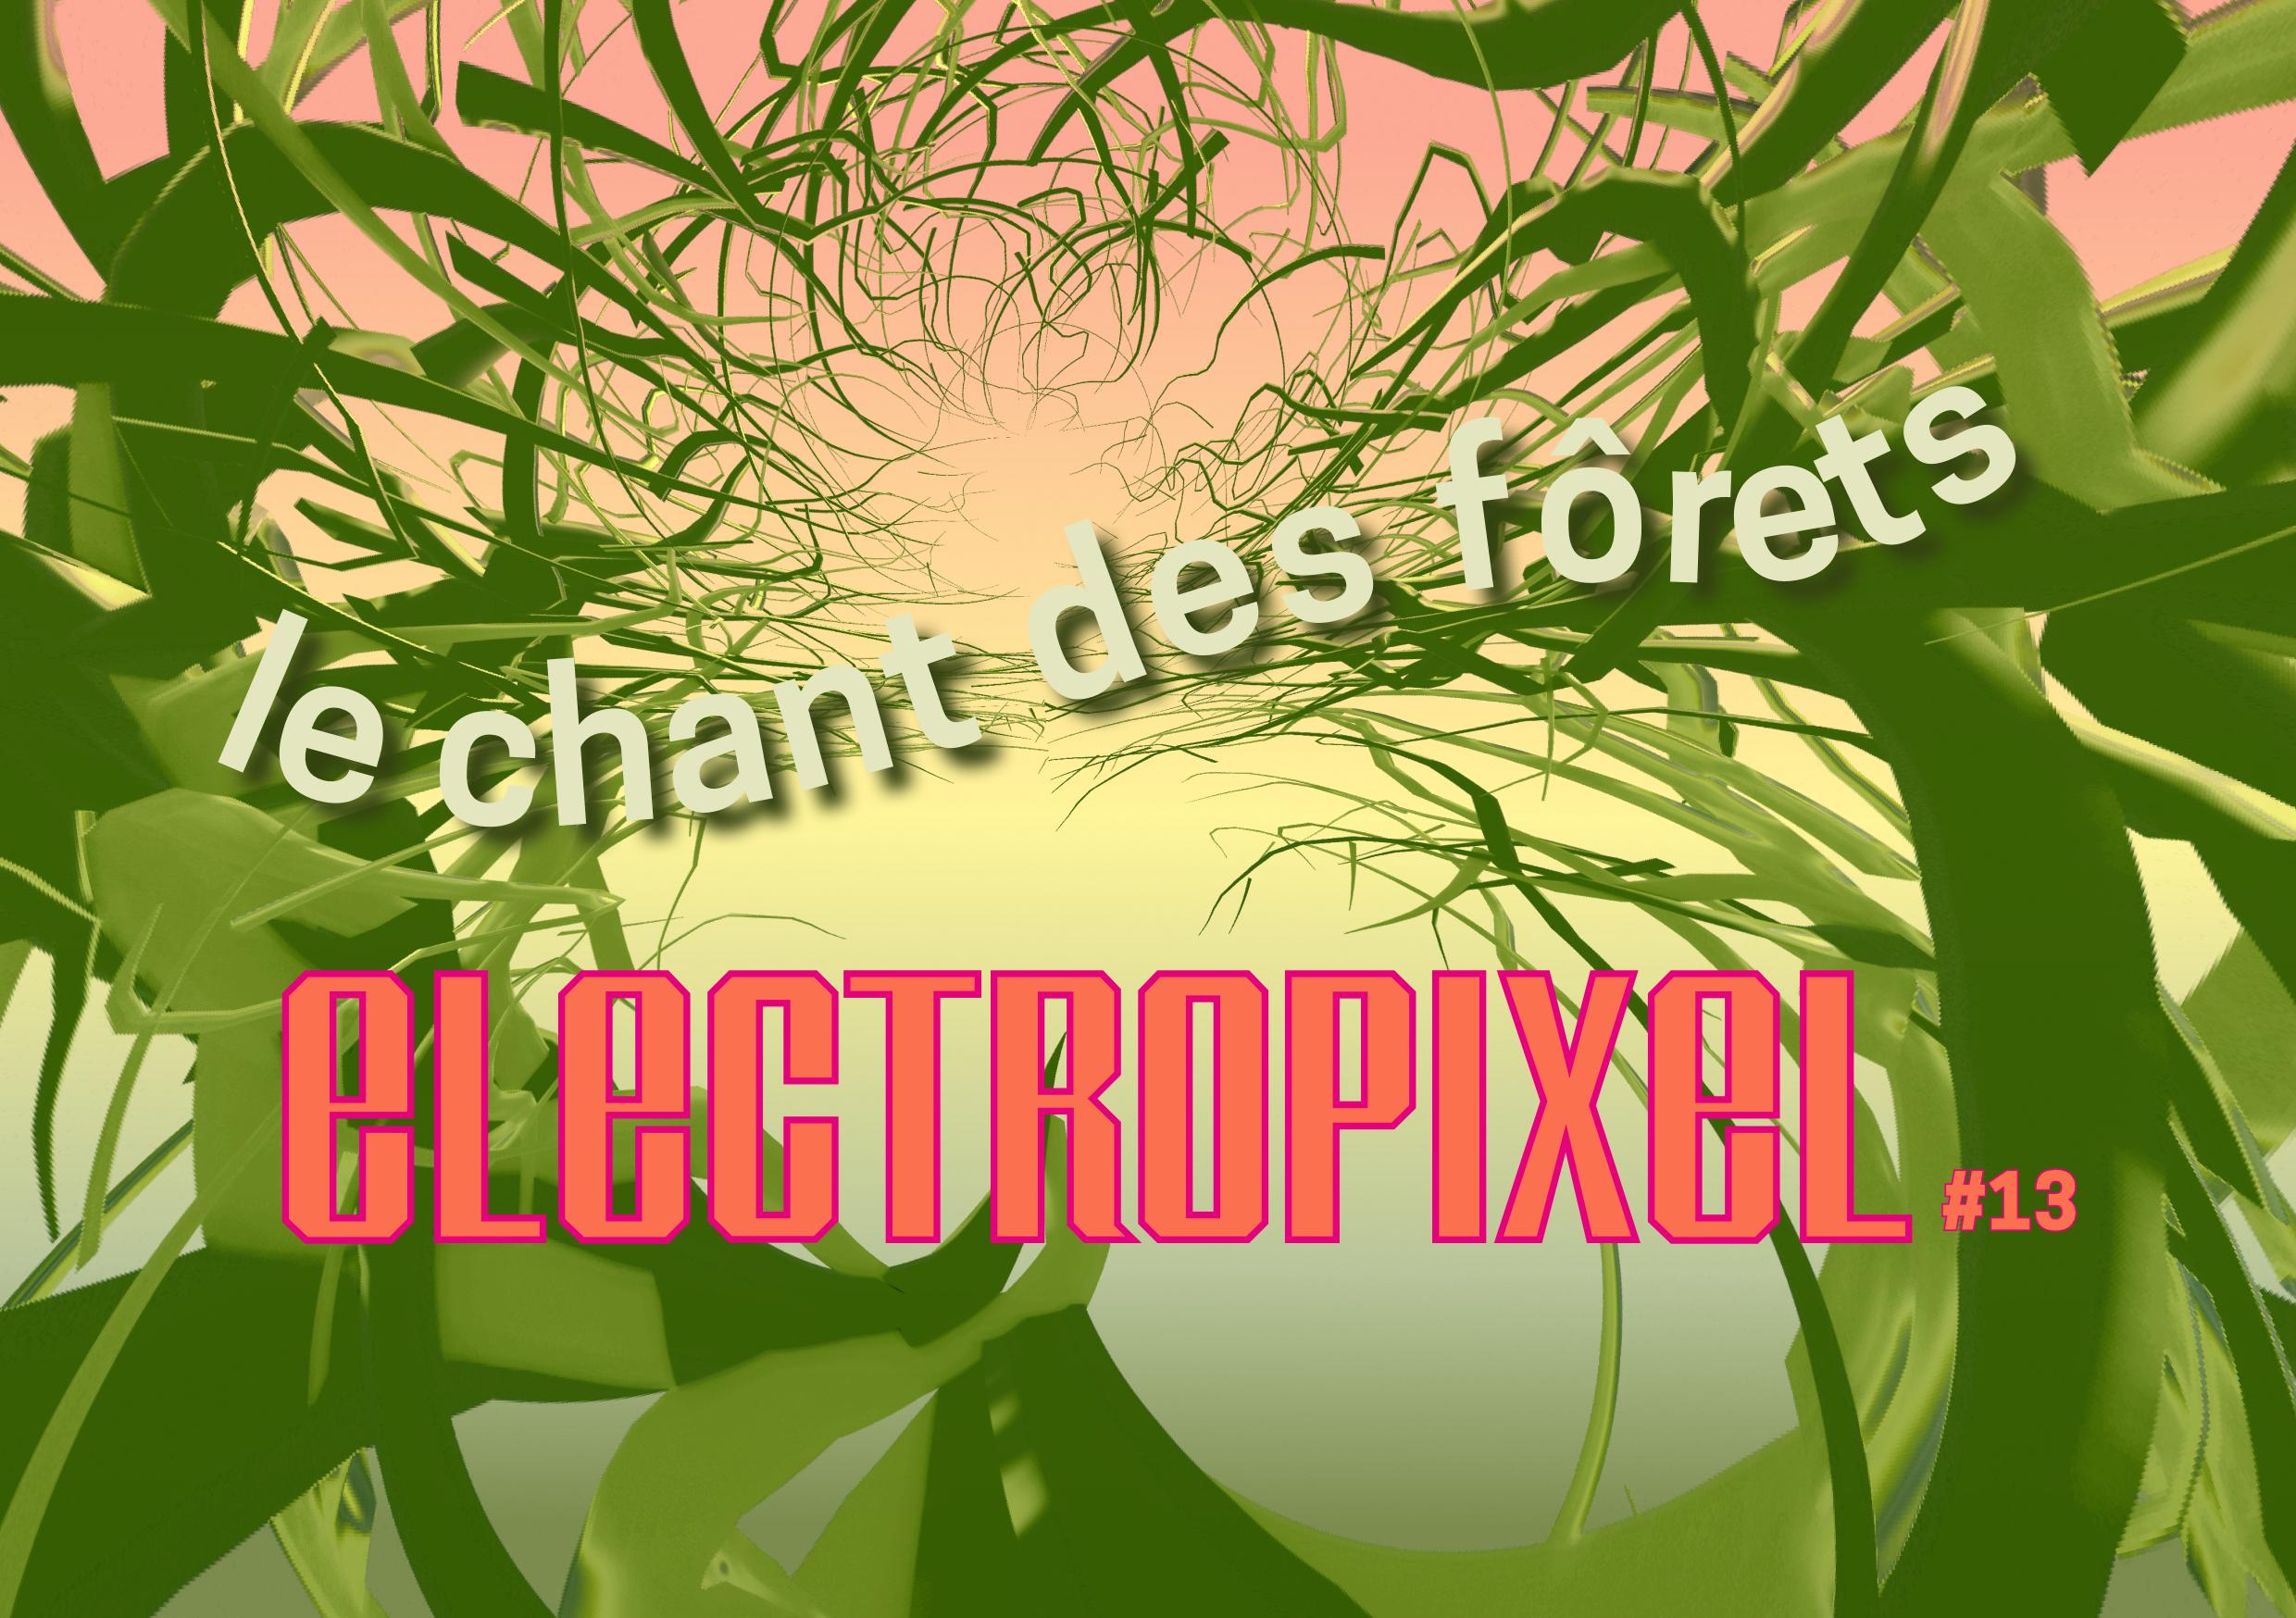 Festival Electropixel 13 – Nantes